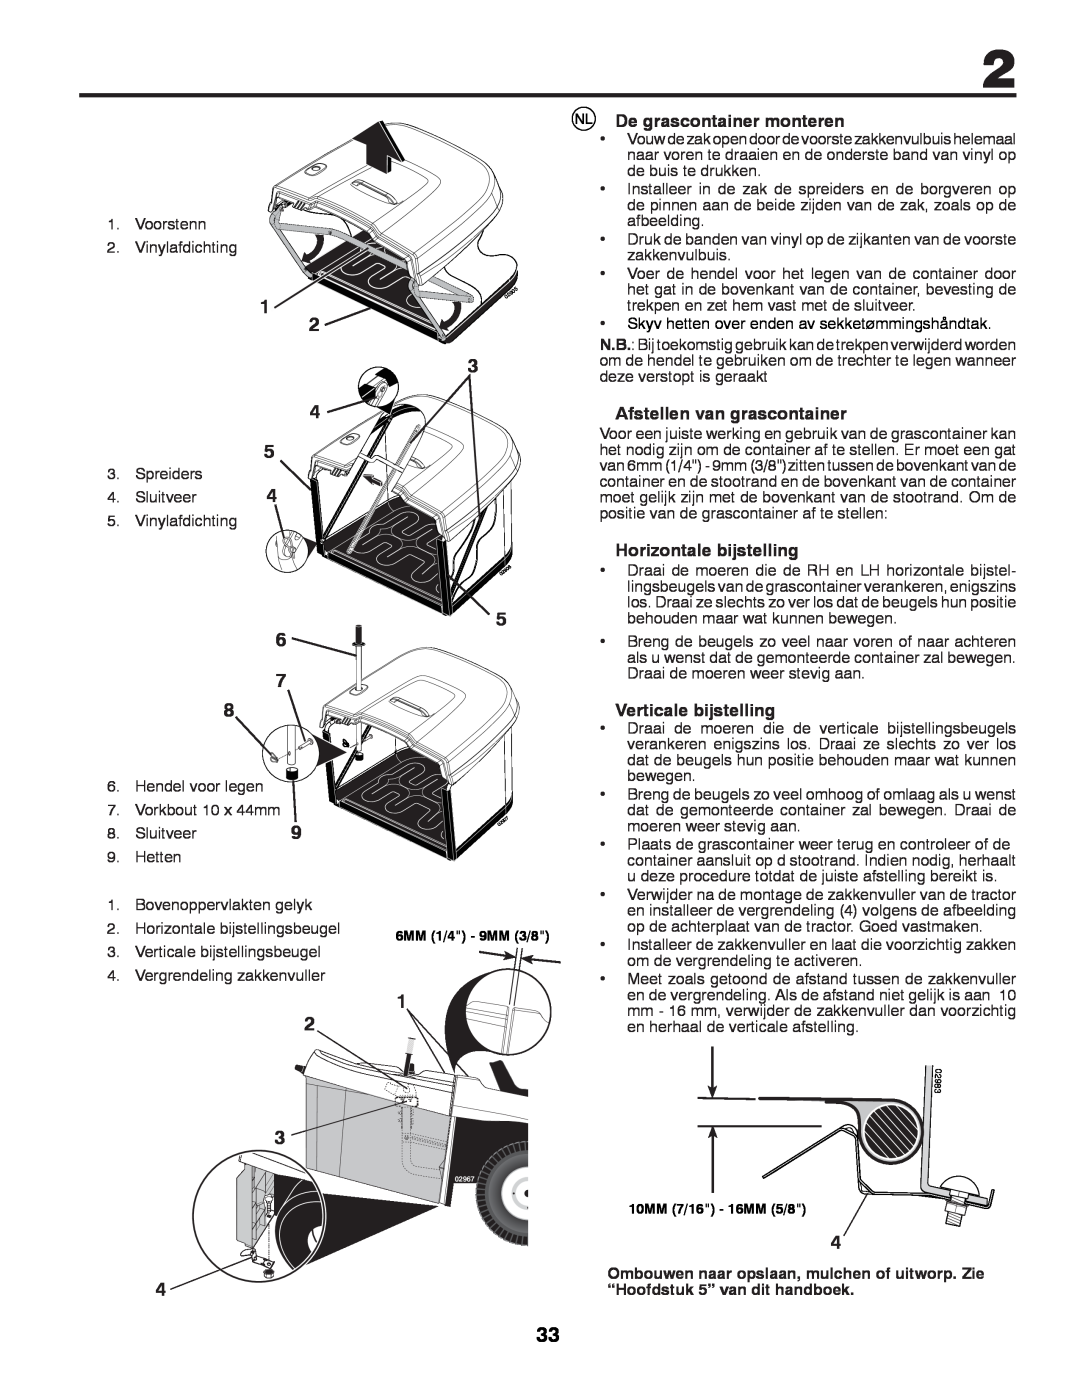 Partner Tech P200107HRB instruction manual De grascontainer monteren, Afstellen van grascontainer, Horizontale bijstelling 